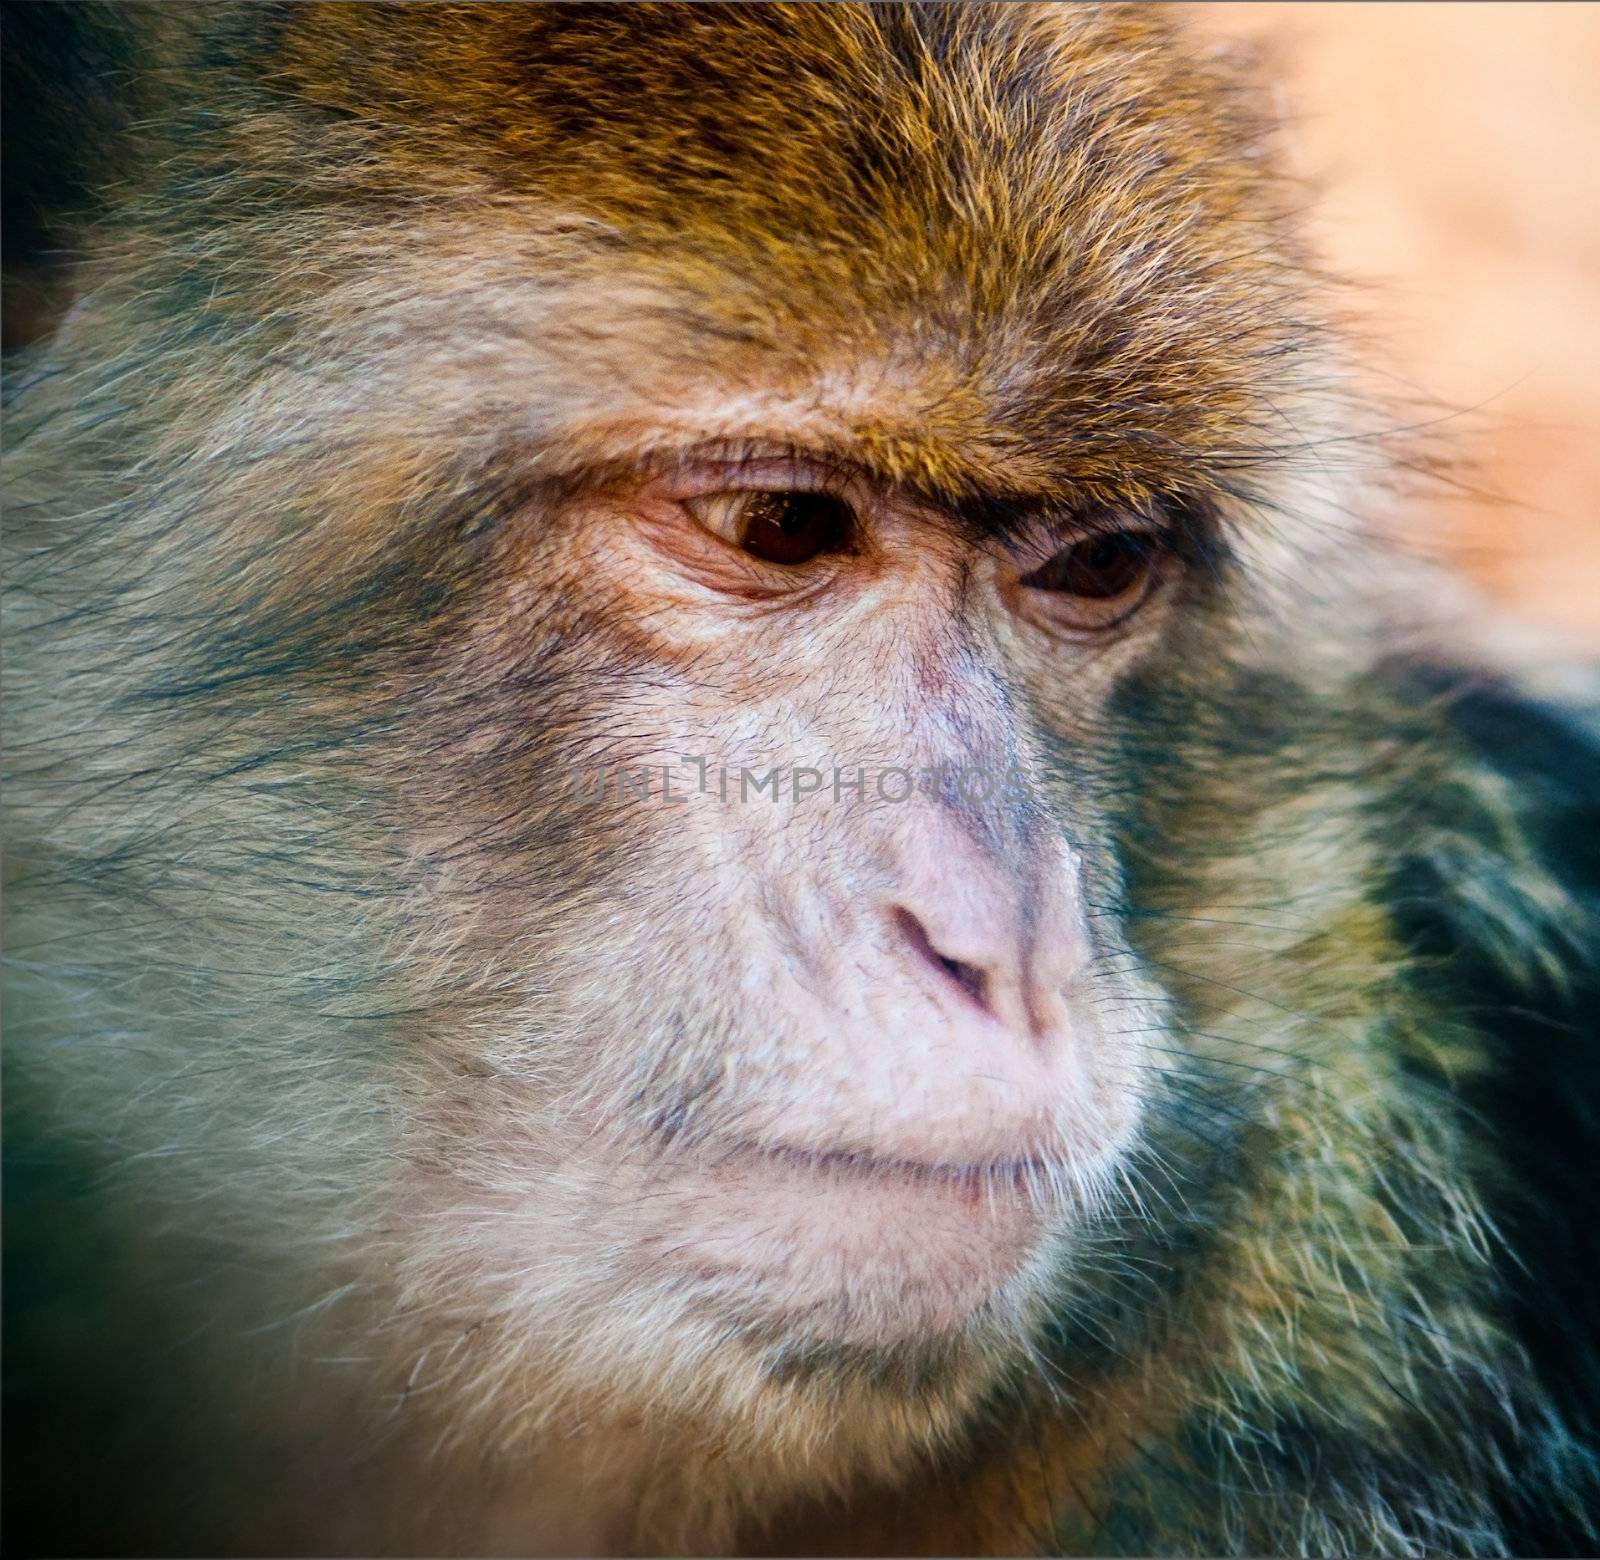 macaque mongkey closeup by GekaSkr